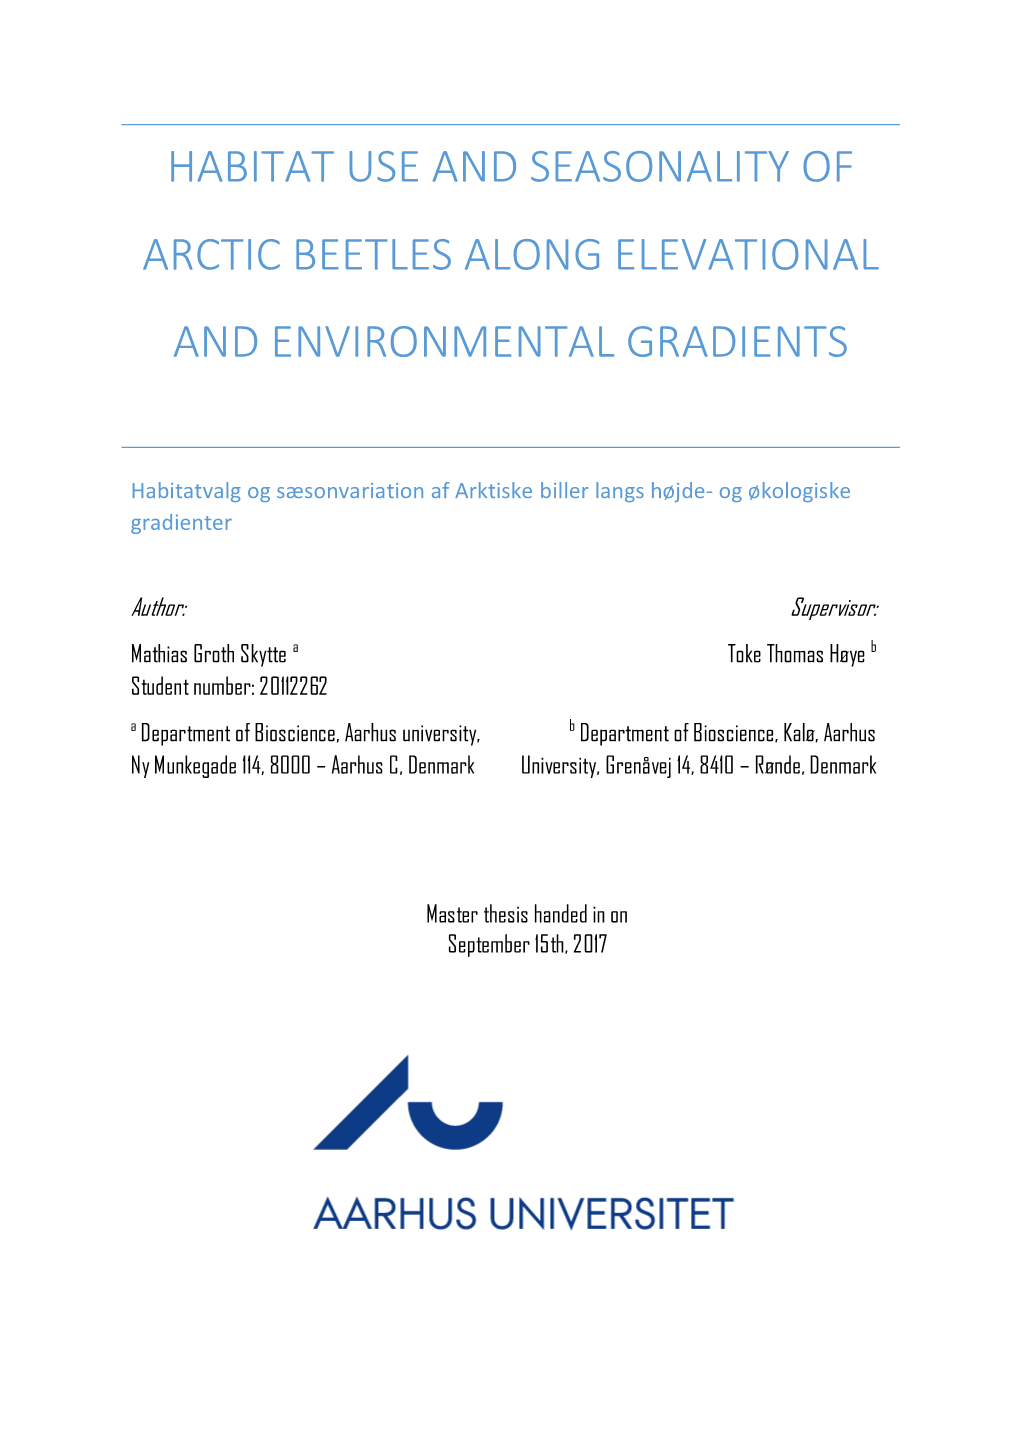 Habitat Use and Seasonality of Arctic Beetles Along Elevational and Environmental Gradients